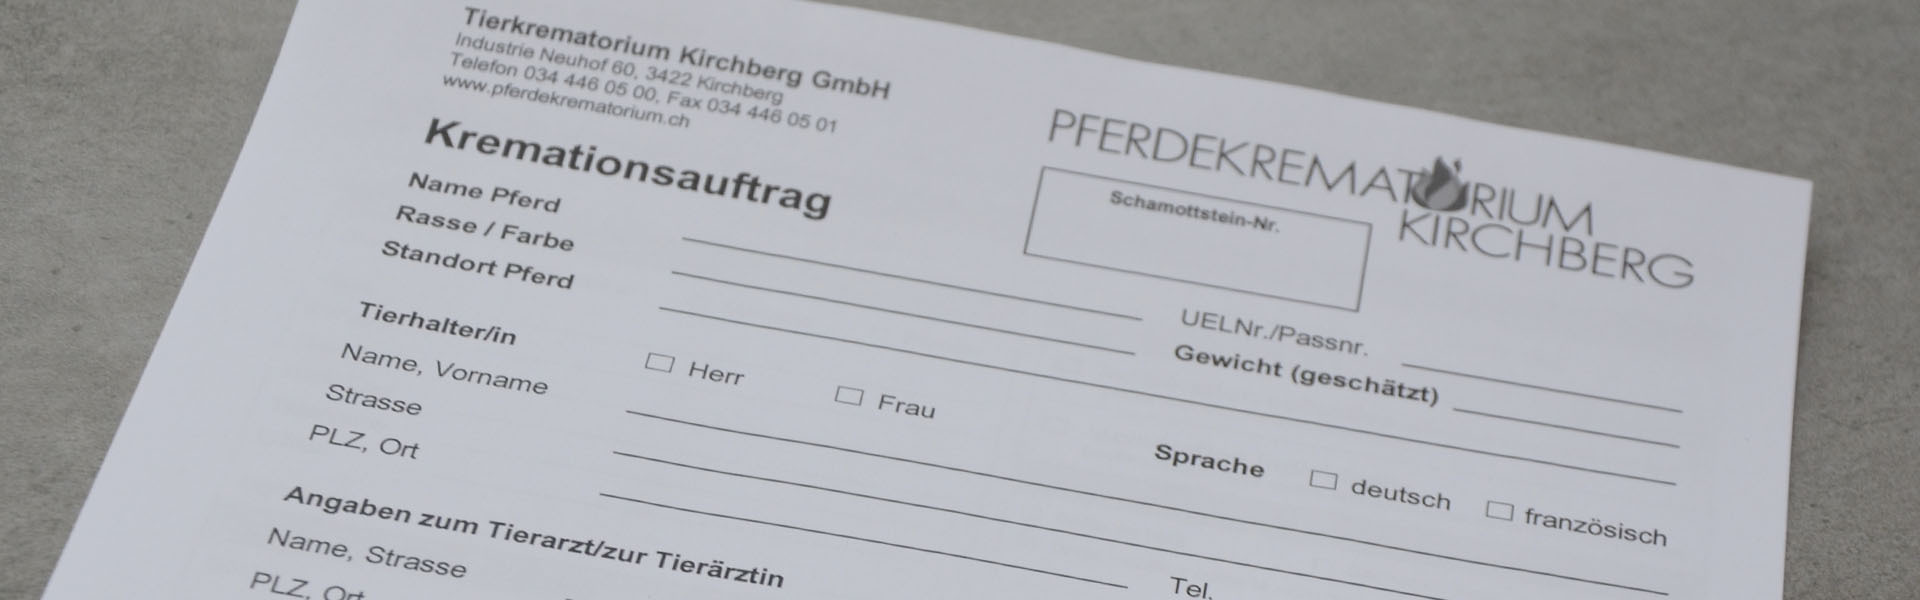 Pferdekrematorium Kirchberg - Kremationsauftrag online - Pferdekrematorium Kirchberg